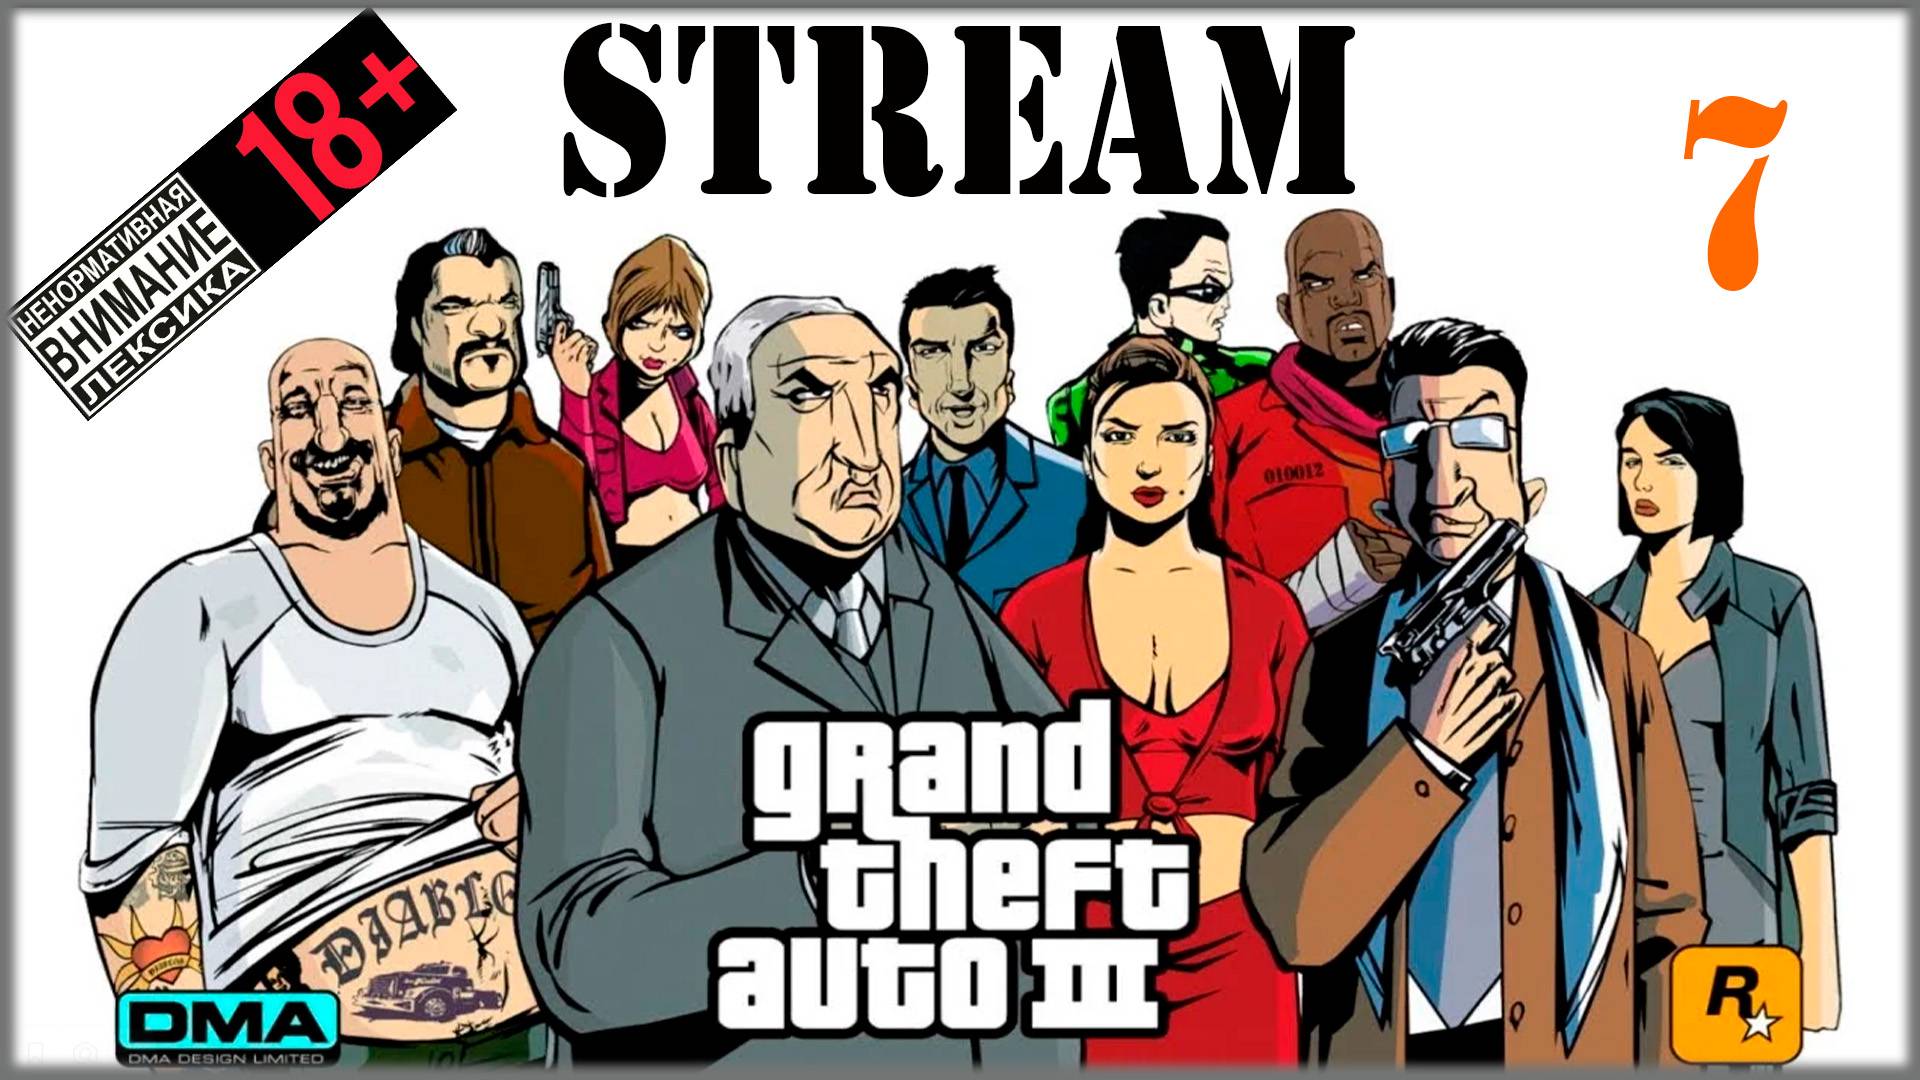 Stream - Grand Theft Auto III: The Definitive Edition #7 аСукин брат